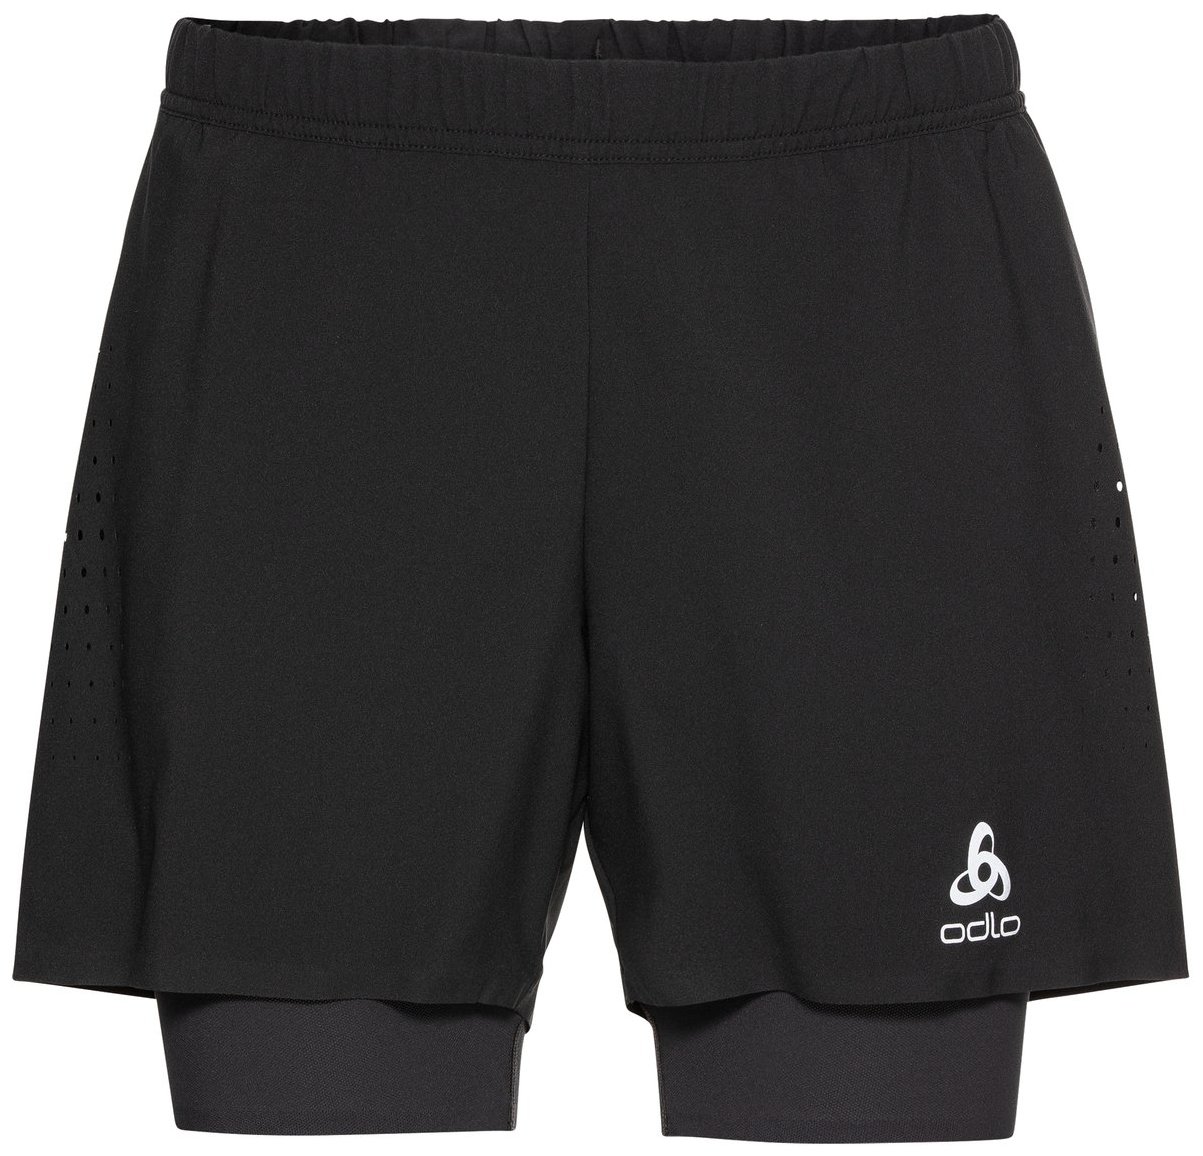 https://www.skimo.co/image/data/odlo/2021/zero-weight-5-inch-2-in-1-shorts-black-front.jpg